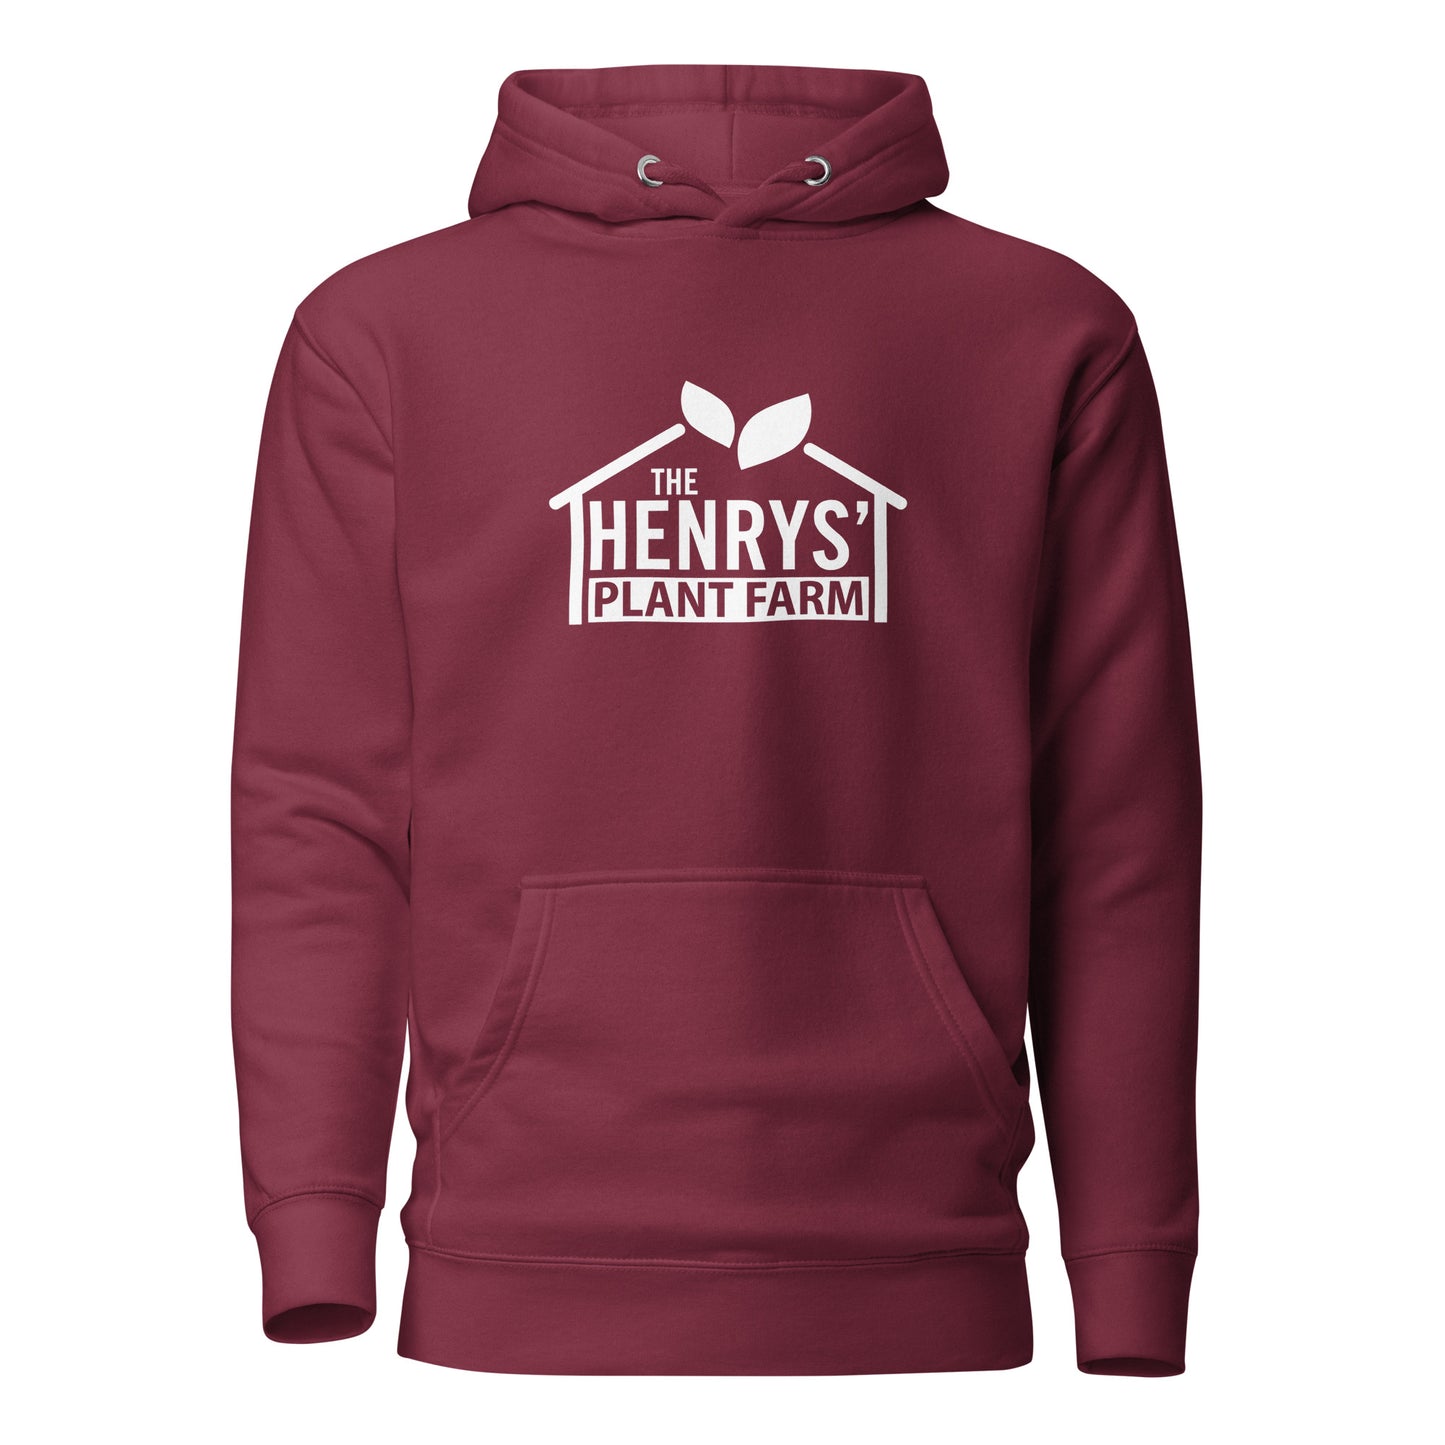 The Henrys' Plant Farm - Unisex Heavyweight Hoodie